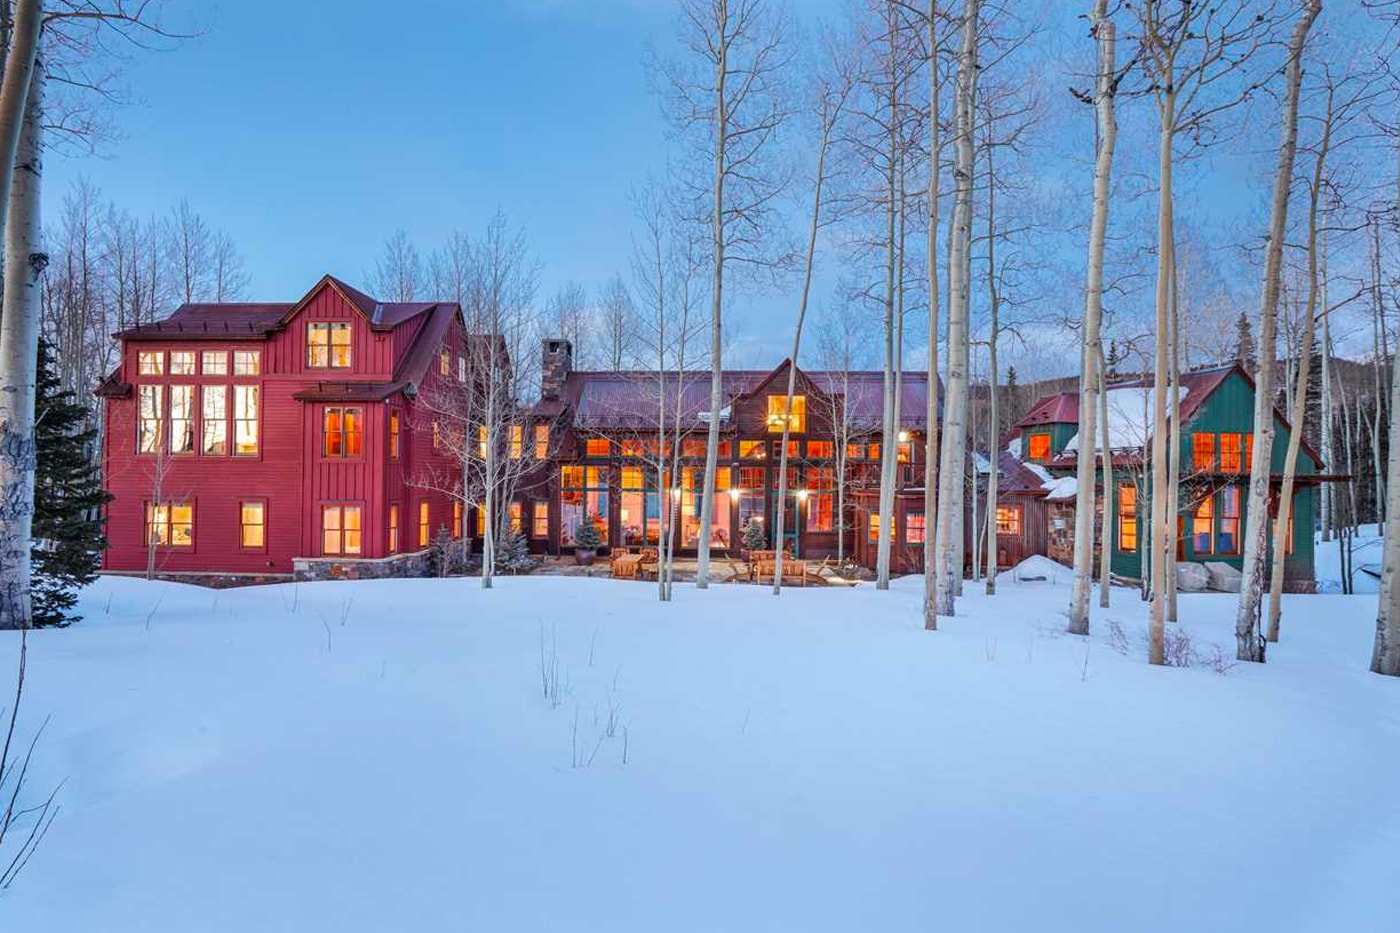 Jerry Seinfeld Colorado Telluride ski house listing comedian celebrity homes ski resort winter housing home Lipkin-Warner architecture 